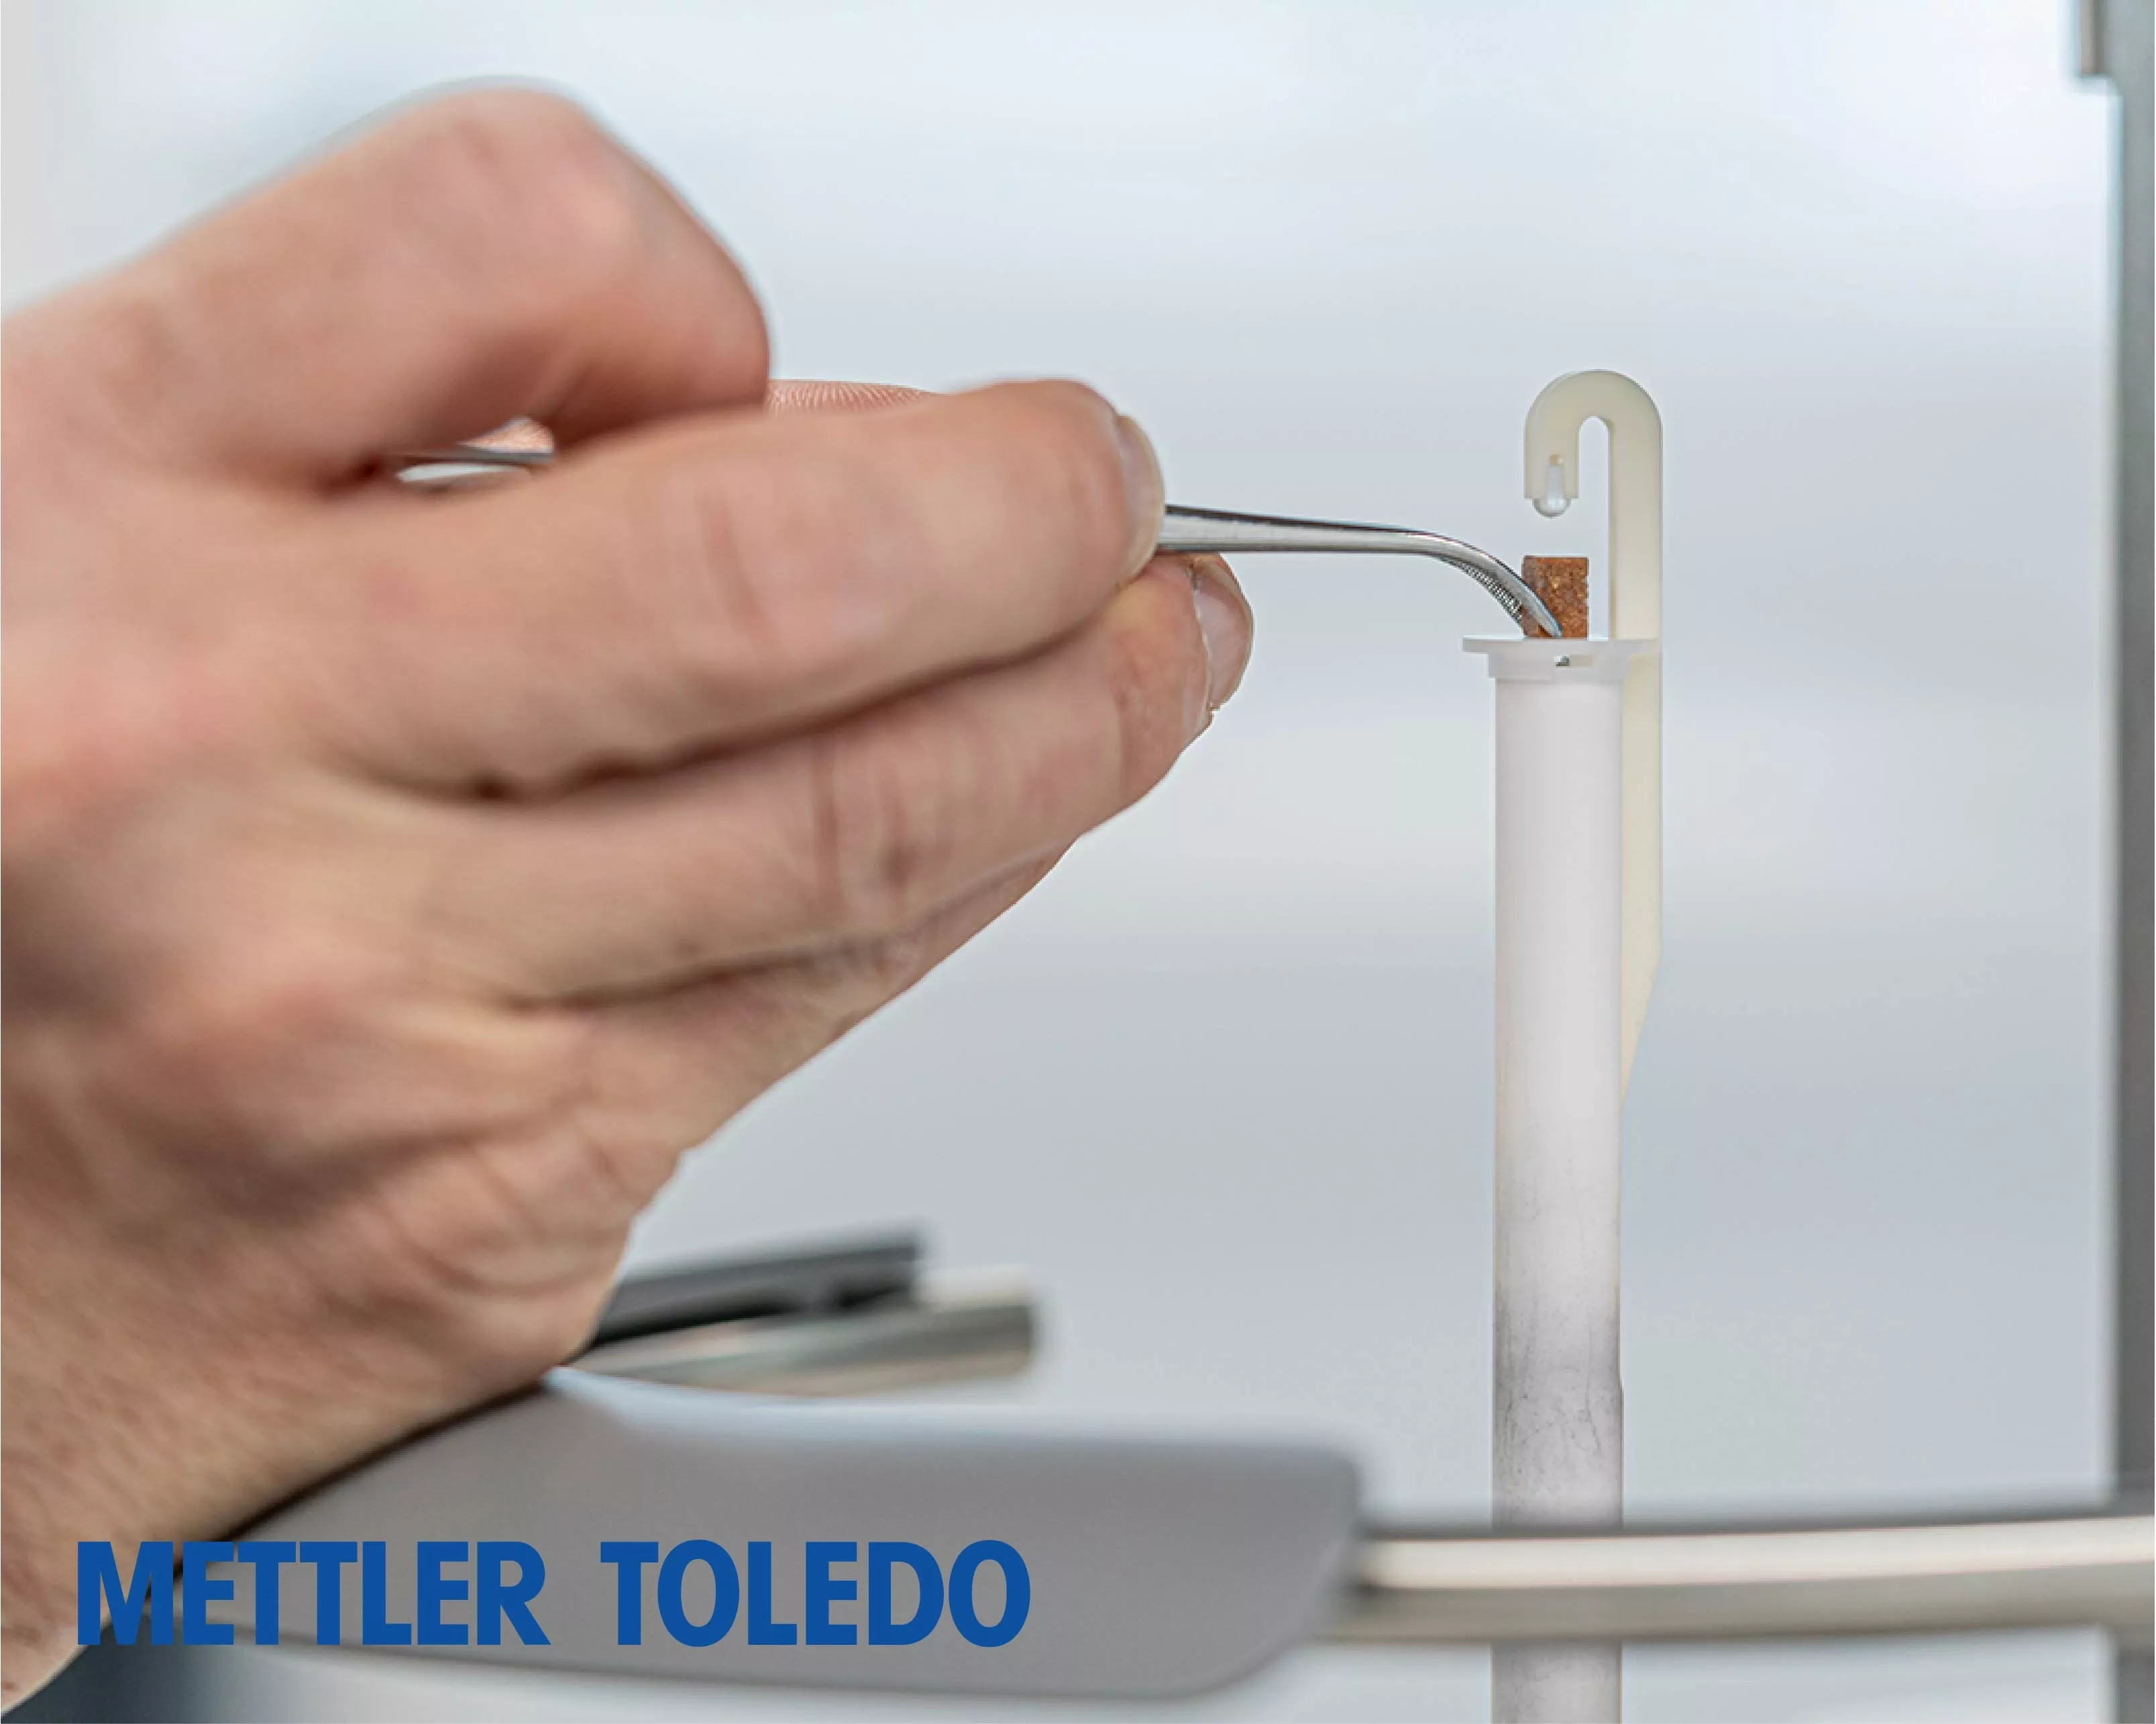 Mettler Toledo Thermal Analysis